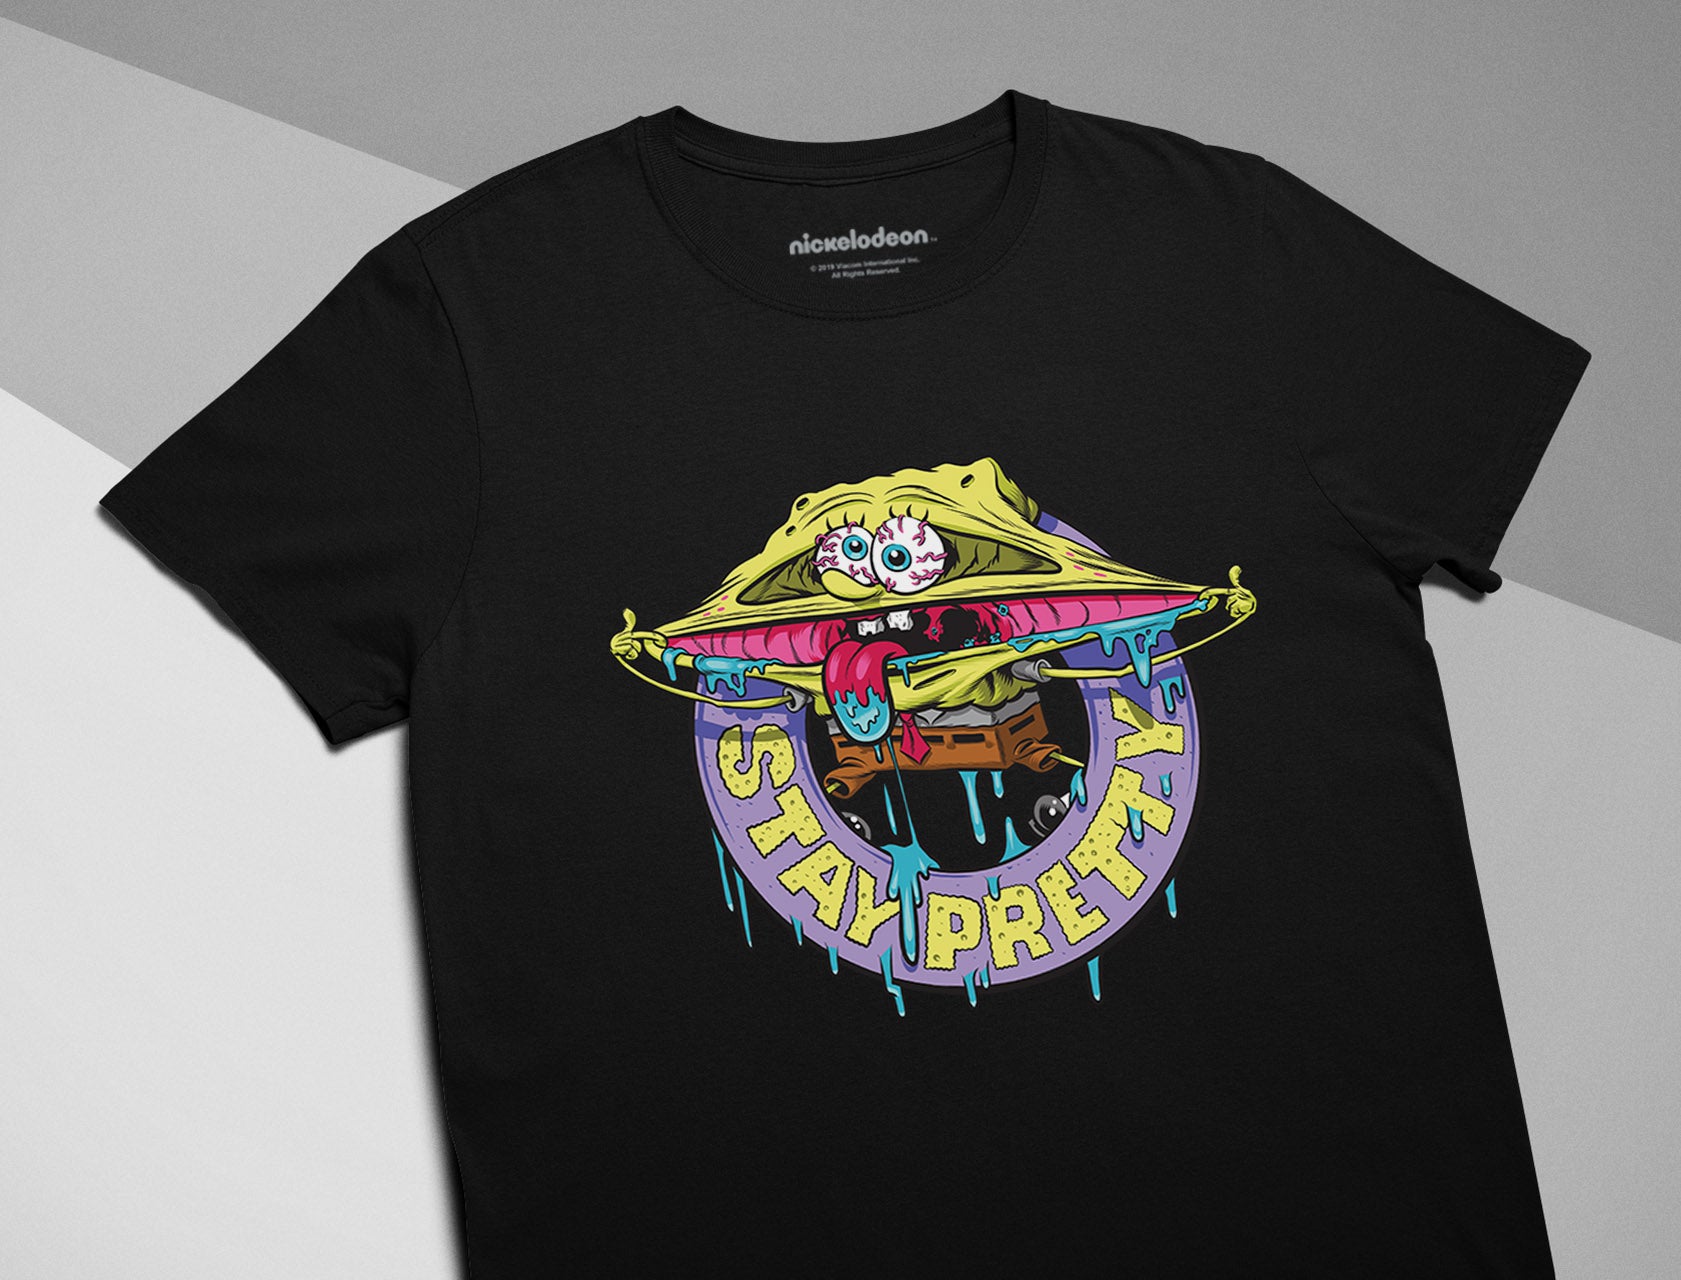 Nickelodeon Spongebob Squarepants Shirt Stay Pretty Funny Party Youth Kids T-Shirt 